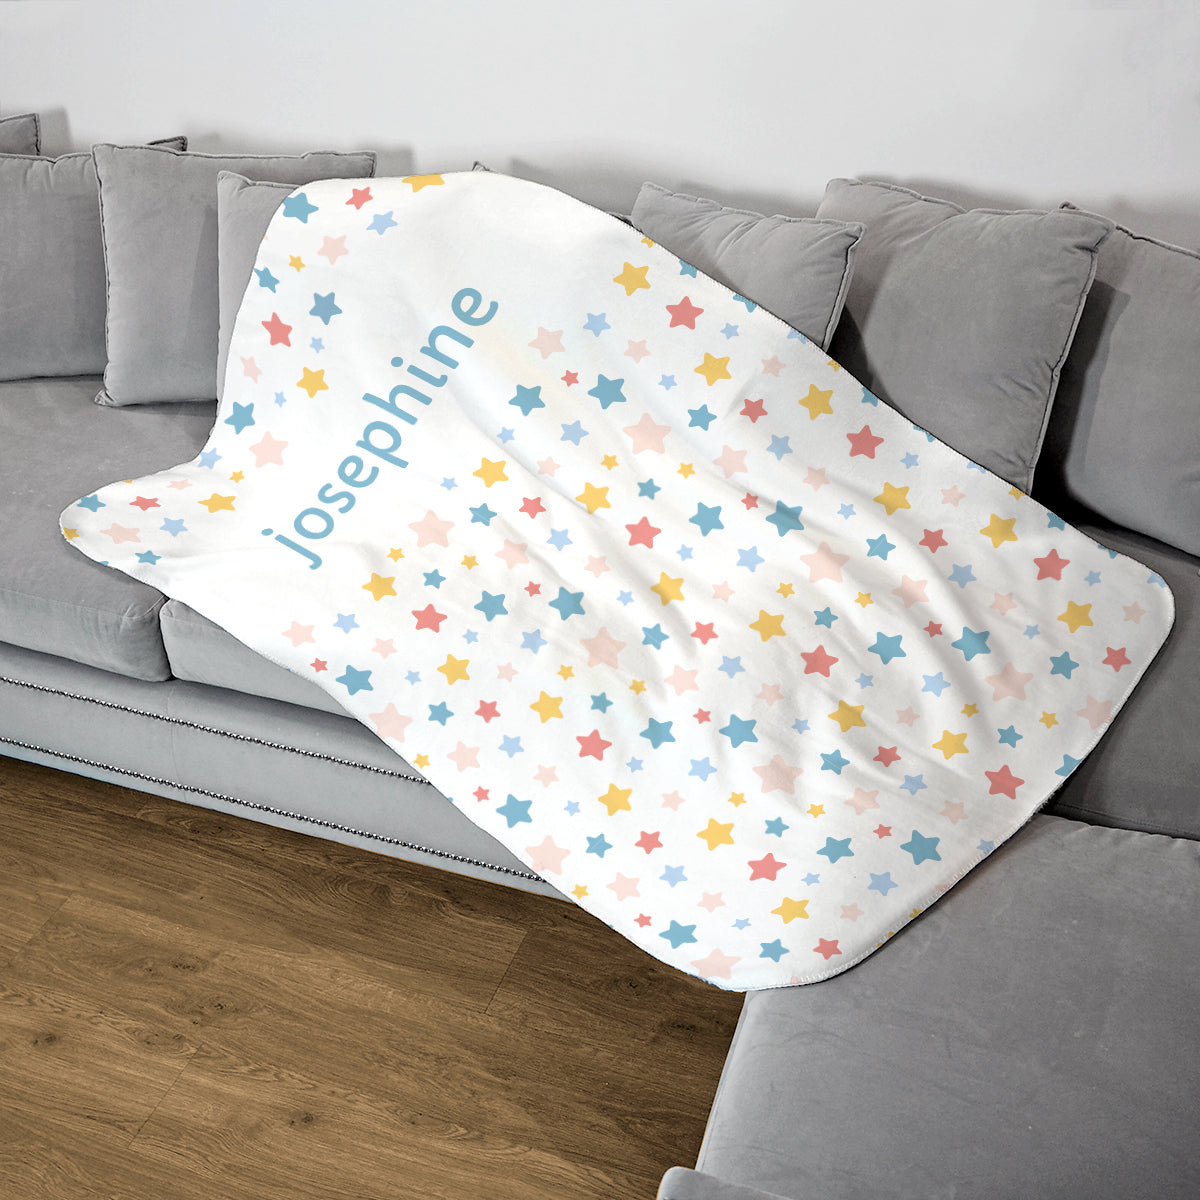 Personalised Childrens Blanket - Colourful Star Print - Fleece Blanket